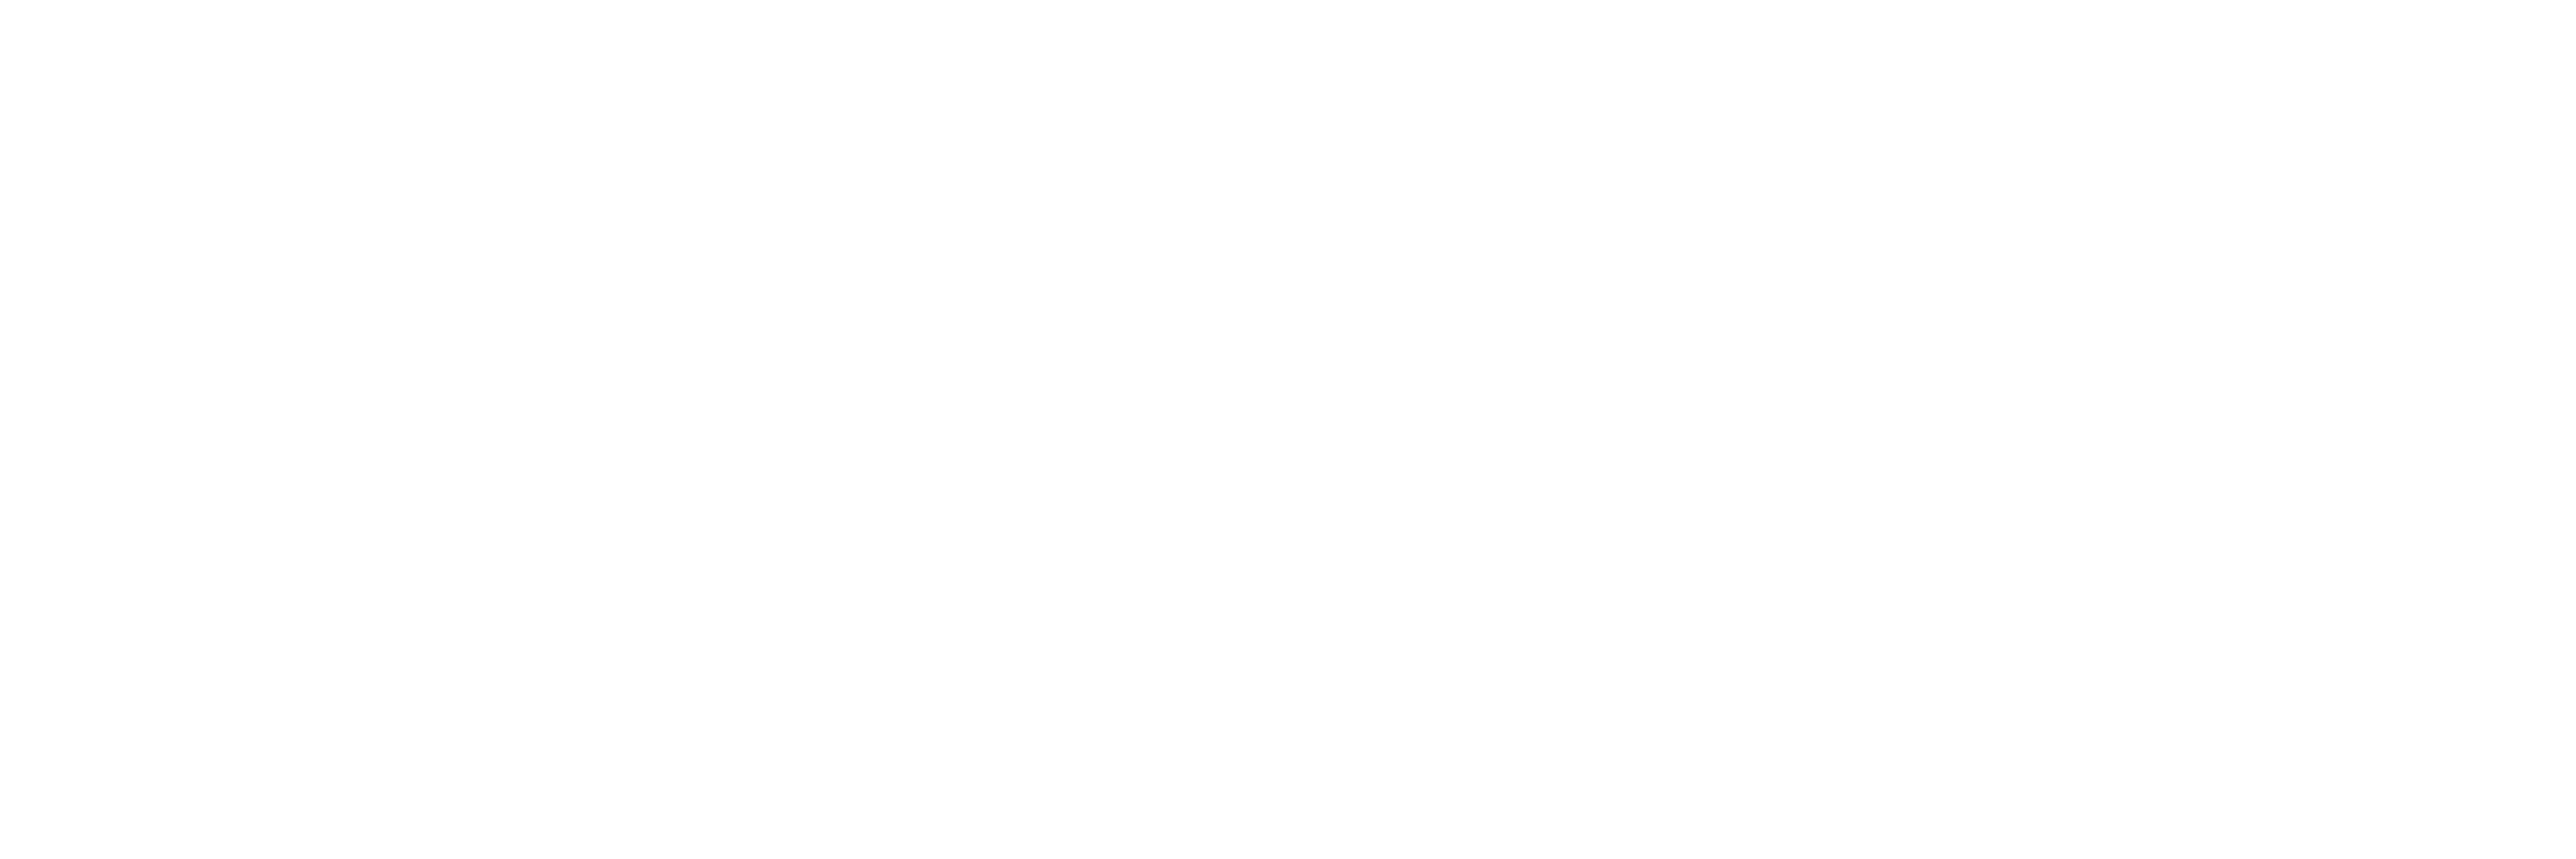 Biotech | Equity